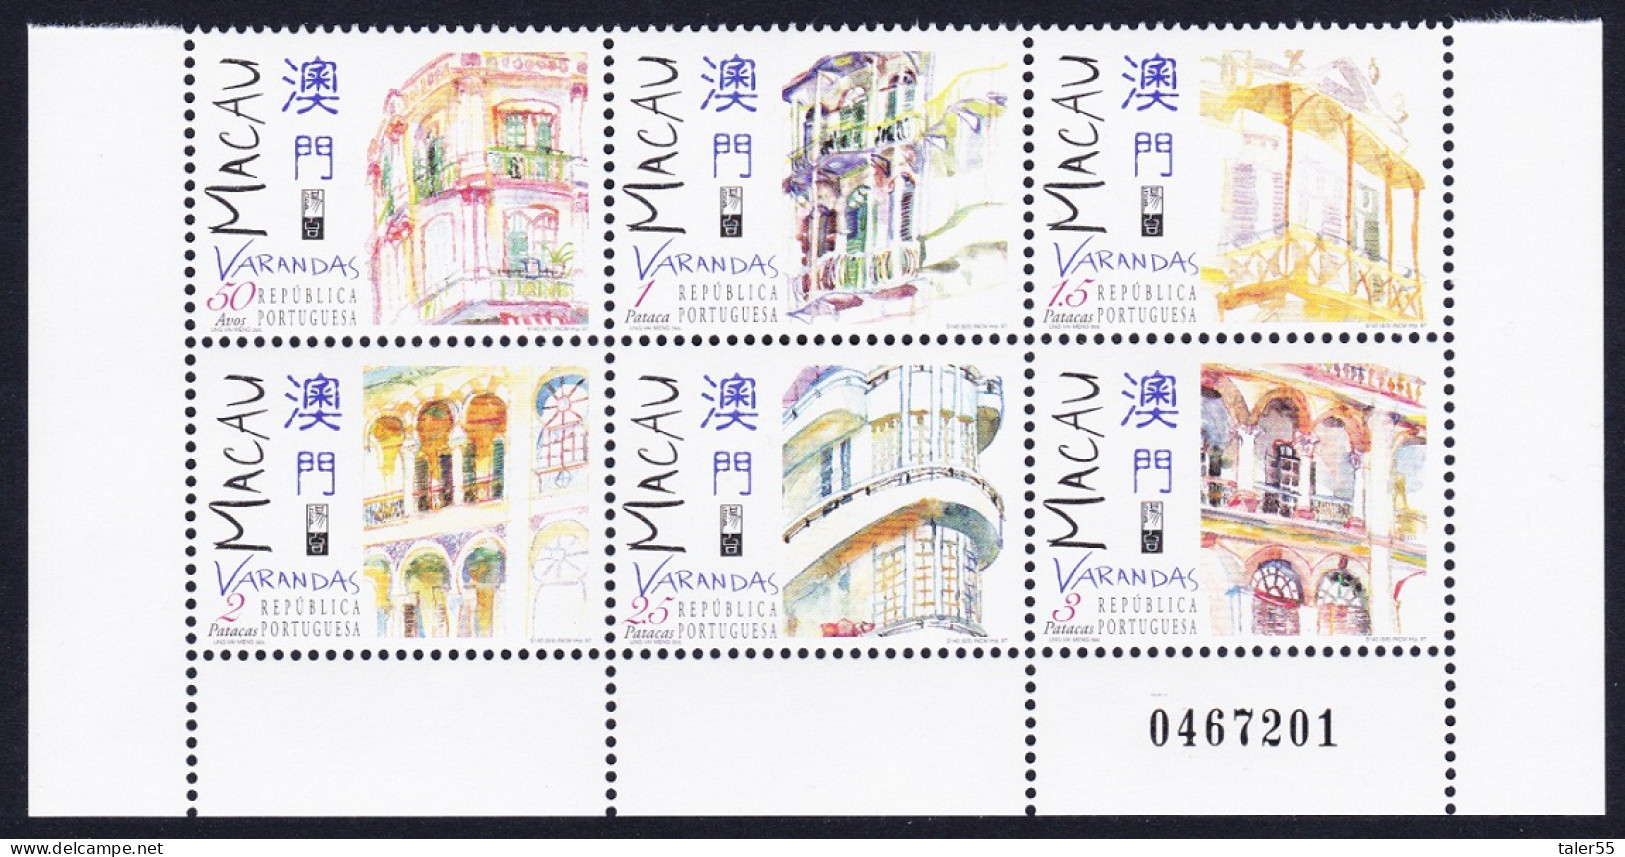 Macao Macau Balconies Block Of 6 Control Number 1997 MNH SG#1000-1005 MI#925-930 Sc#891a - Ongebruikt